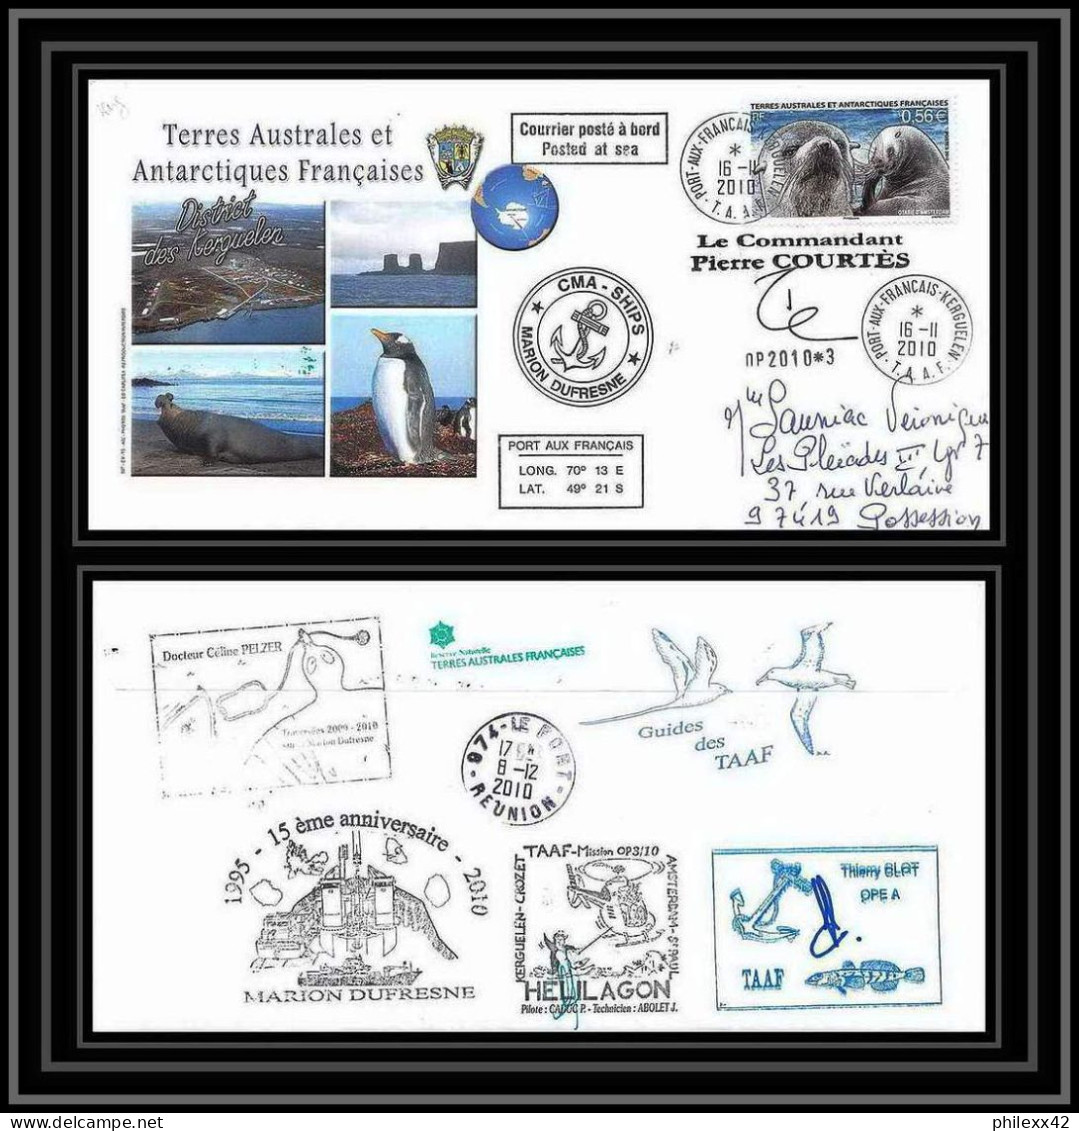 3040 Helilagon Dufresne Signé Signed Op 16/11/2010/3 Kerguelen N°569 Otarie Seal Terres Australes (taaf) Lettre Cover - Hubschrauber